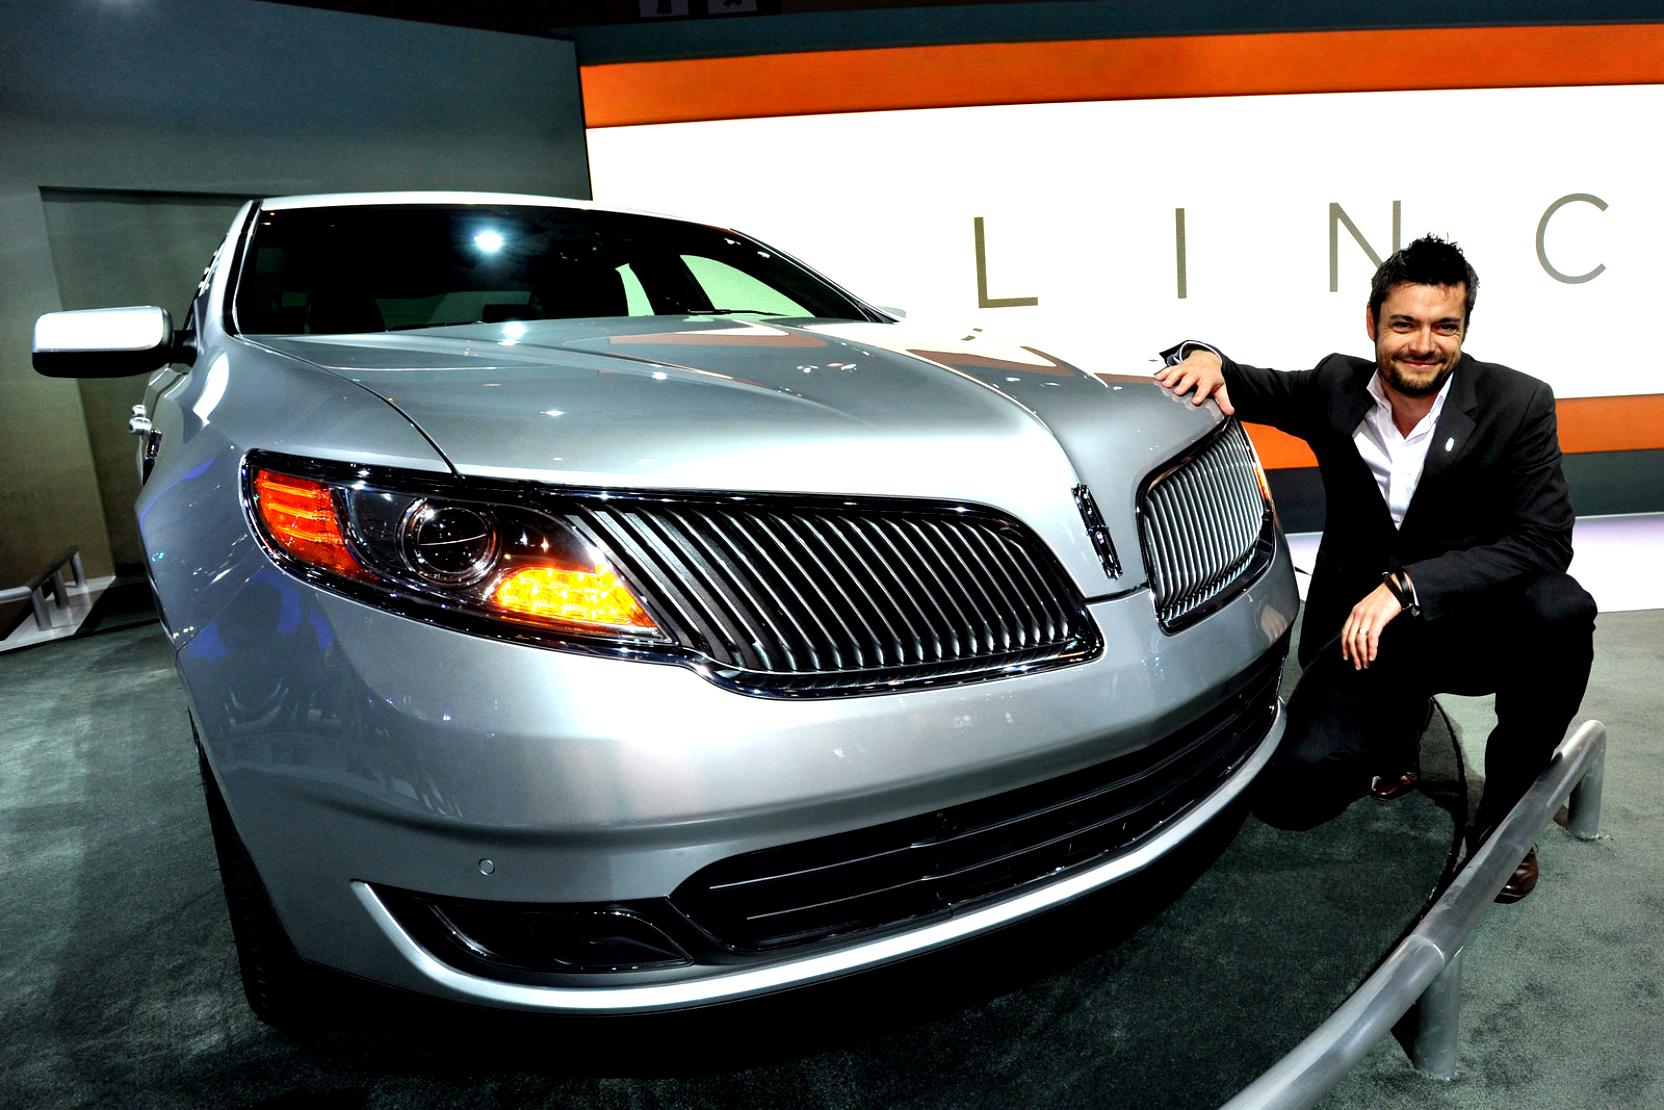 Lincoln MKS 2013 #47